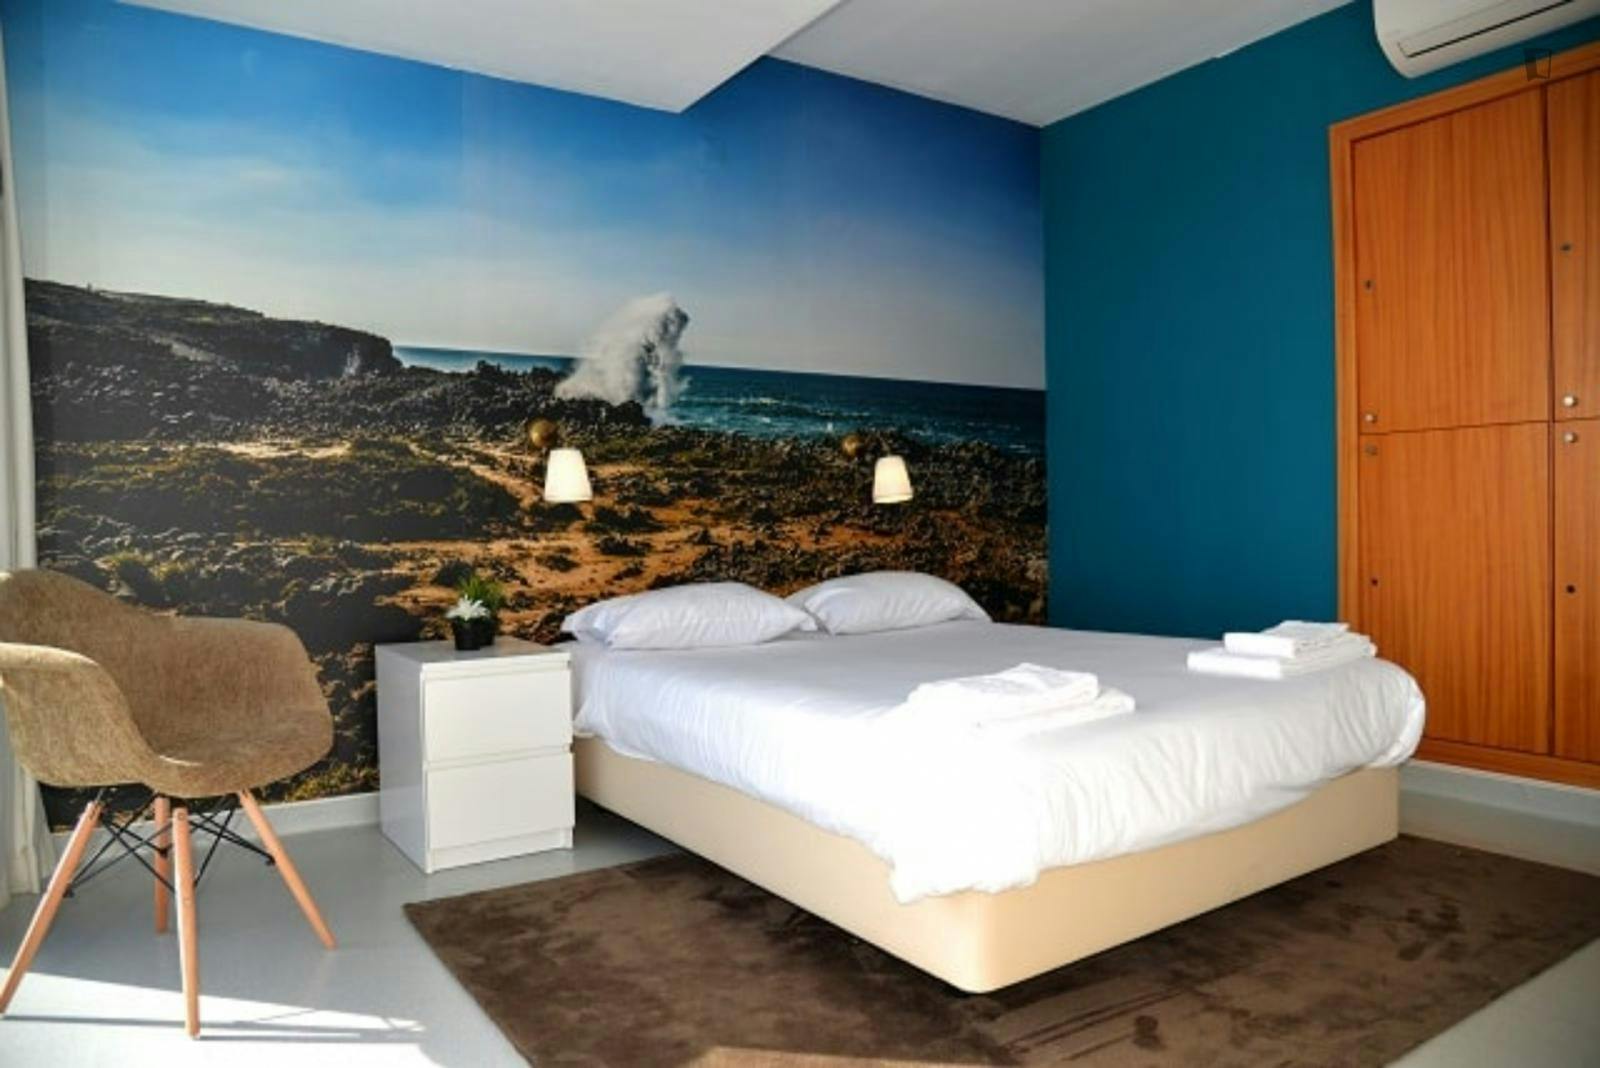 Very cool double bedroom in a hostel, in Arrifana